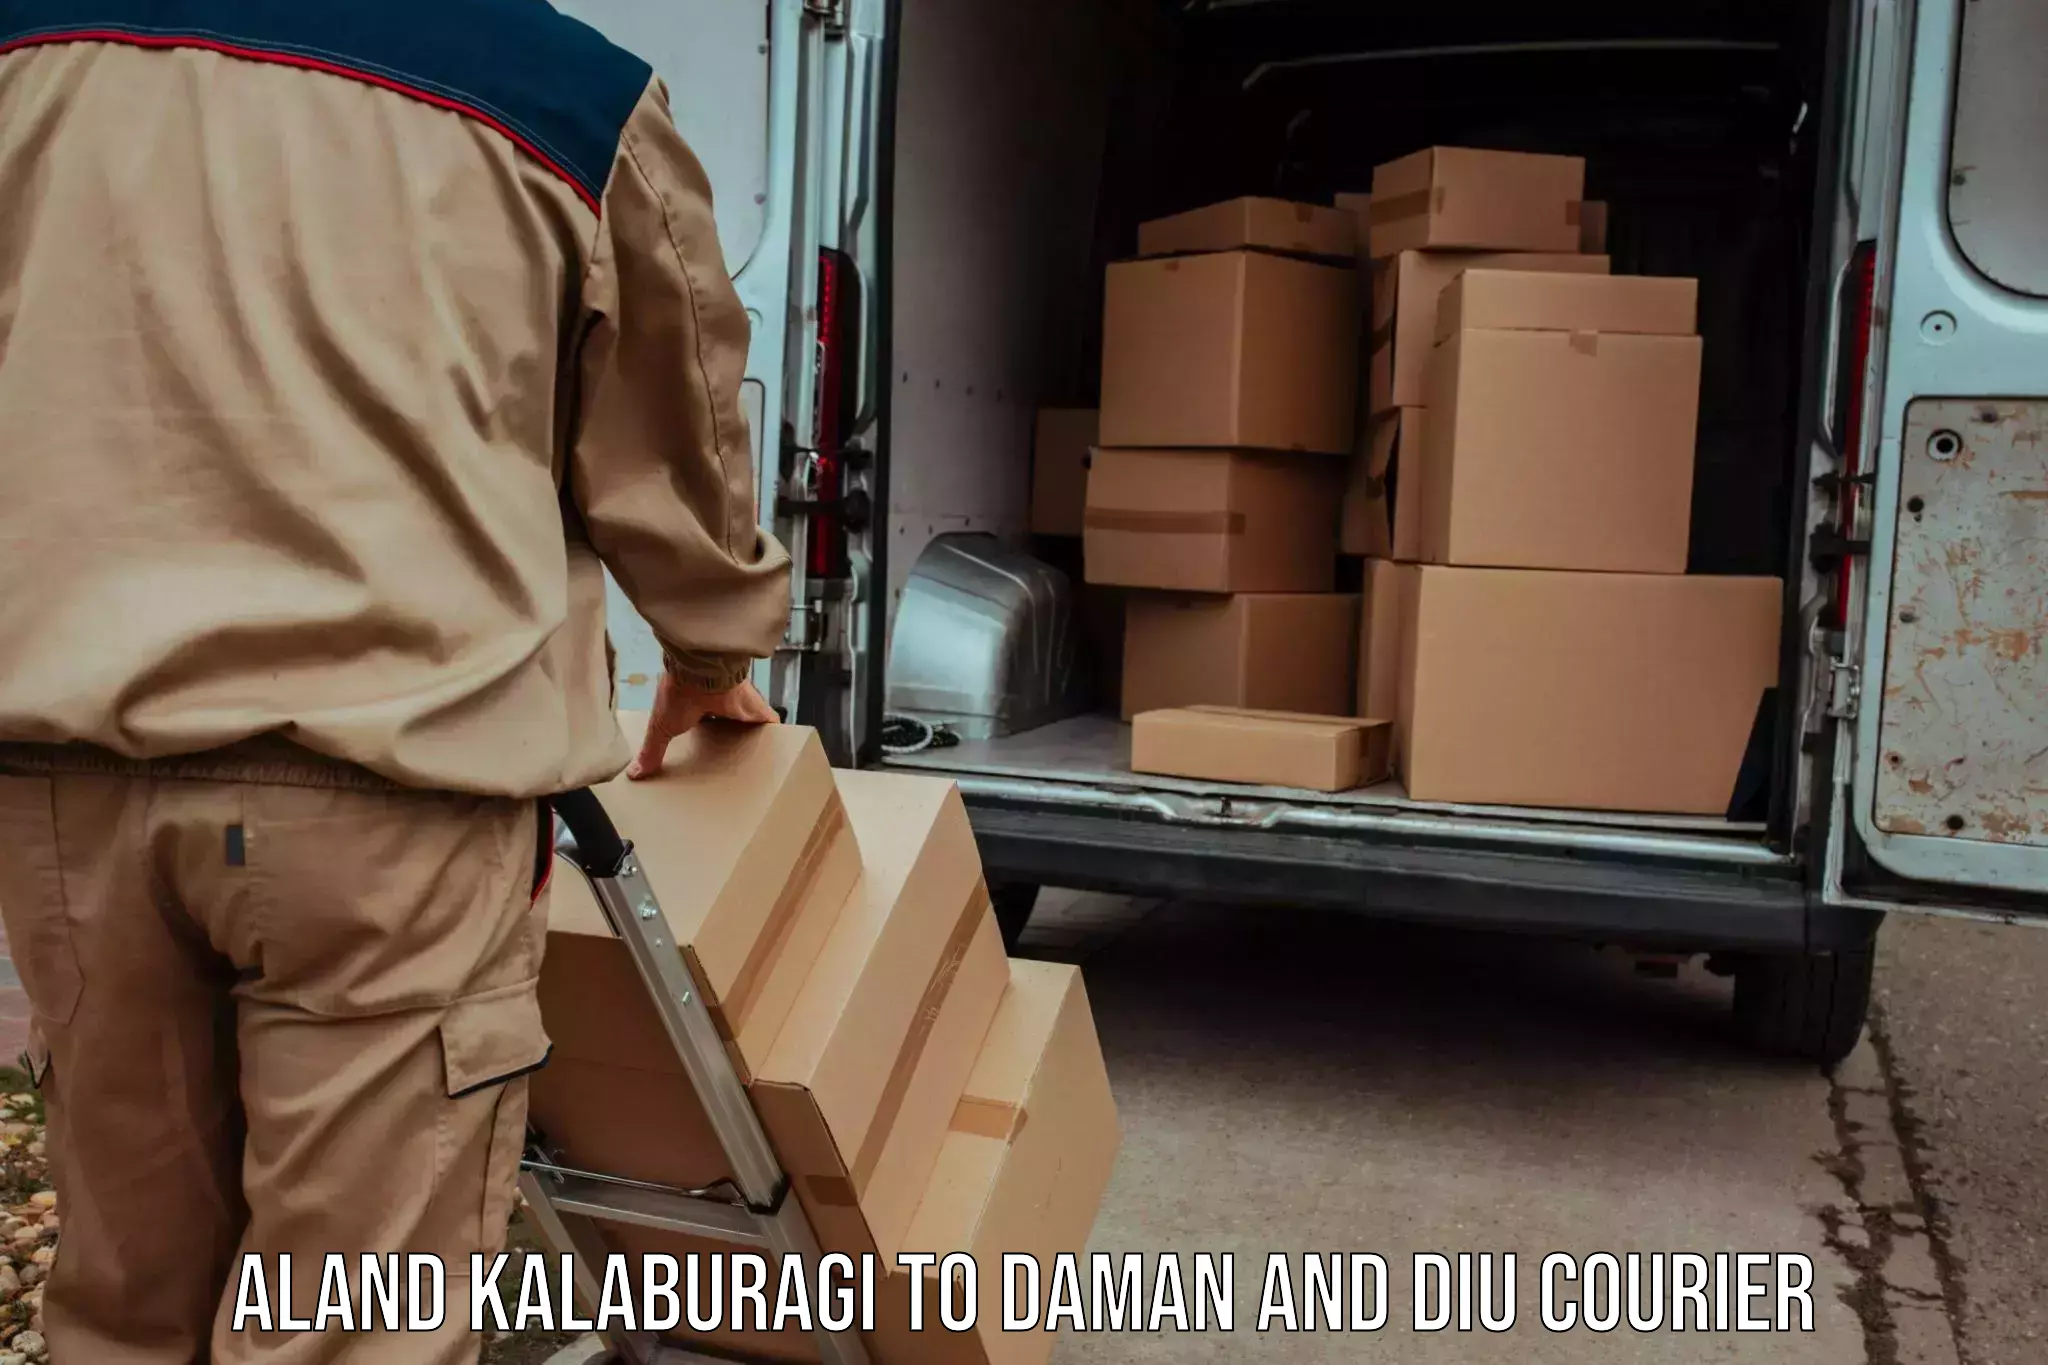 Personal parcel delivery Aland Kalaburagi to Diu